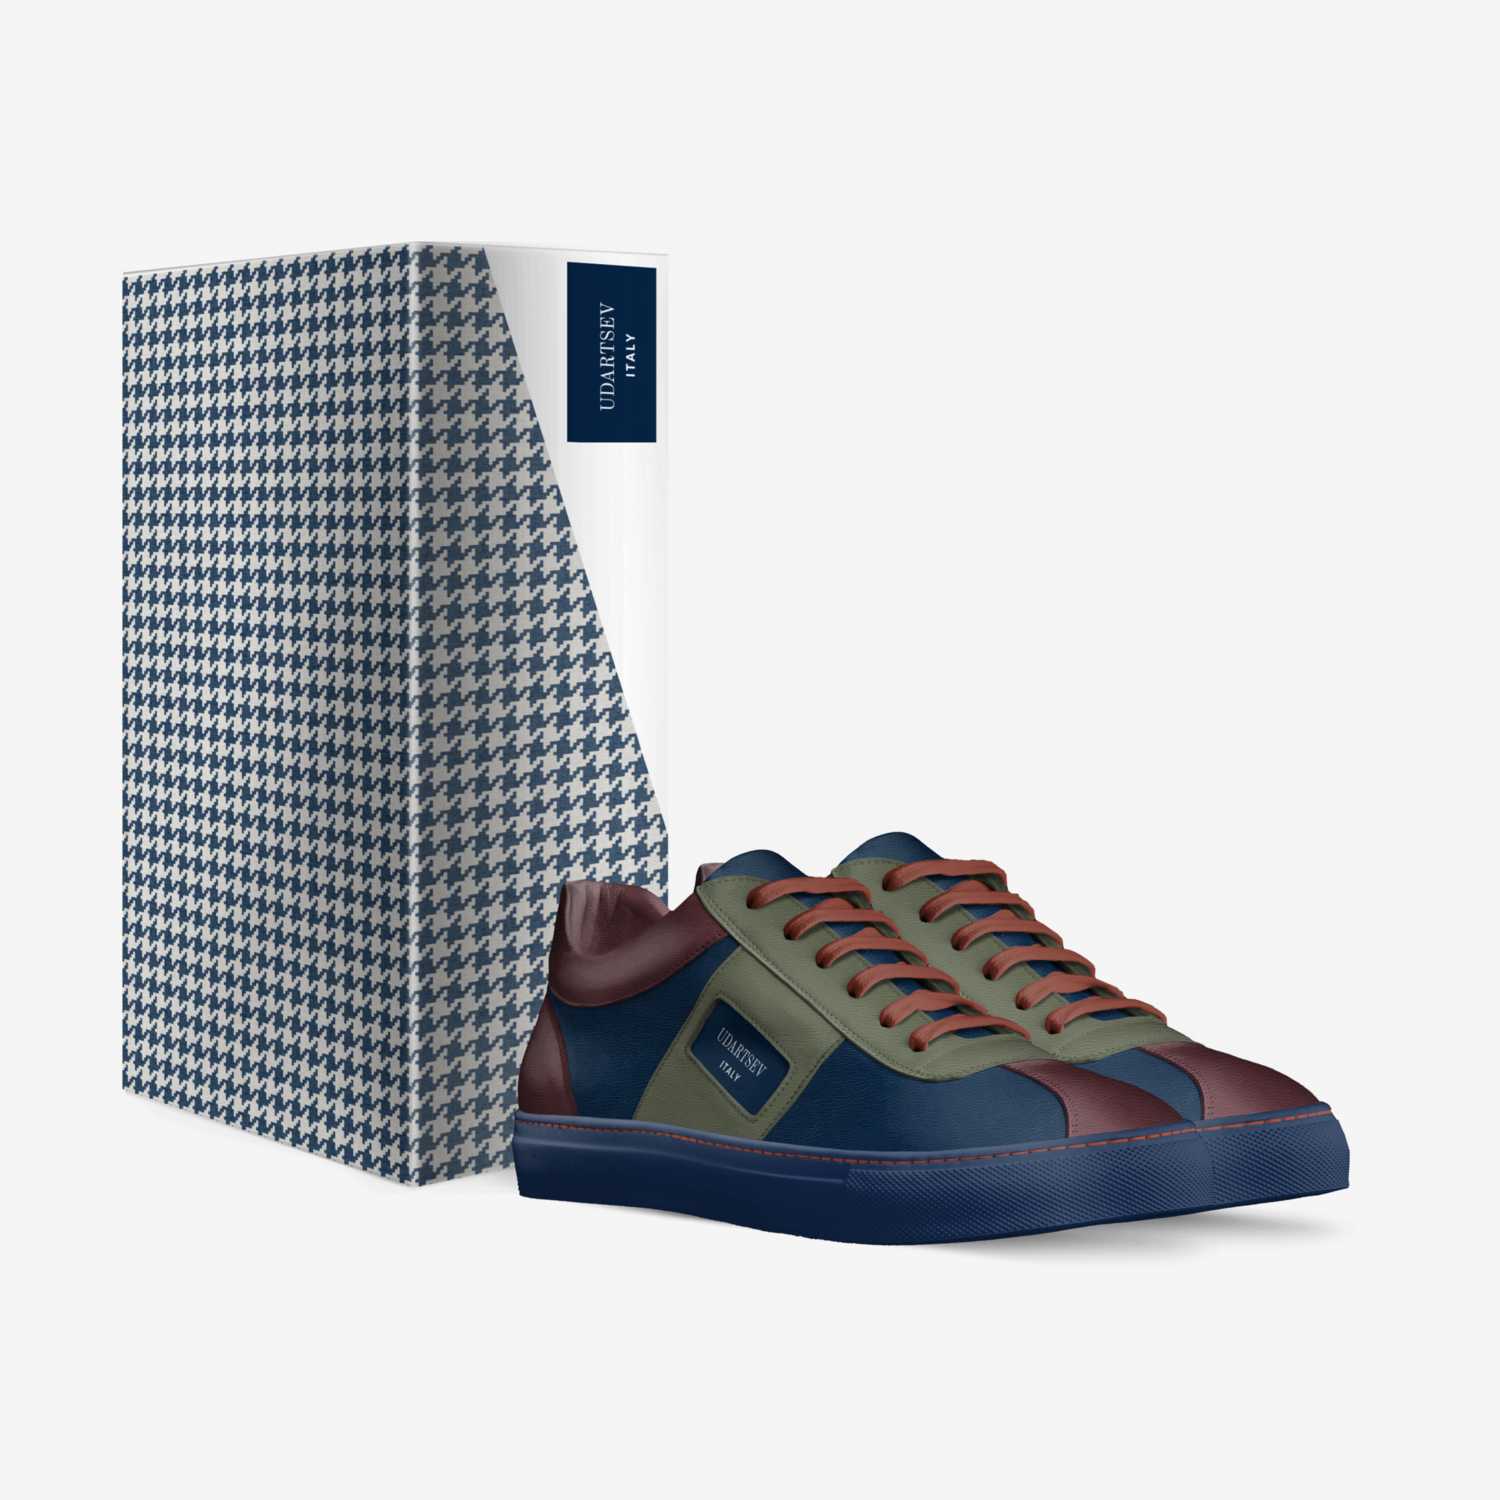 UDARTSEV  custom made in Italy shoes by Artur Udartsev | Box view